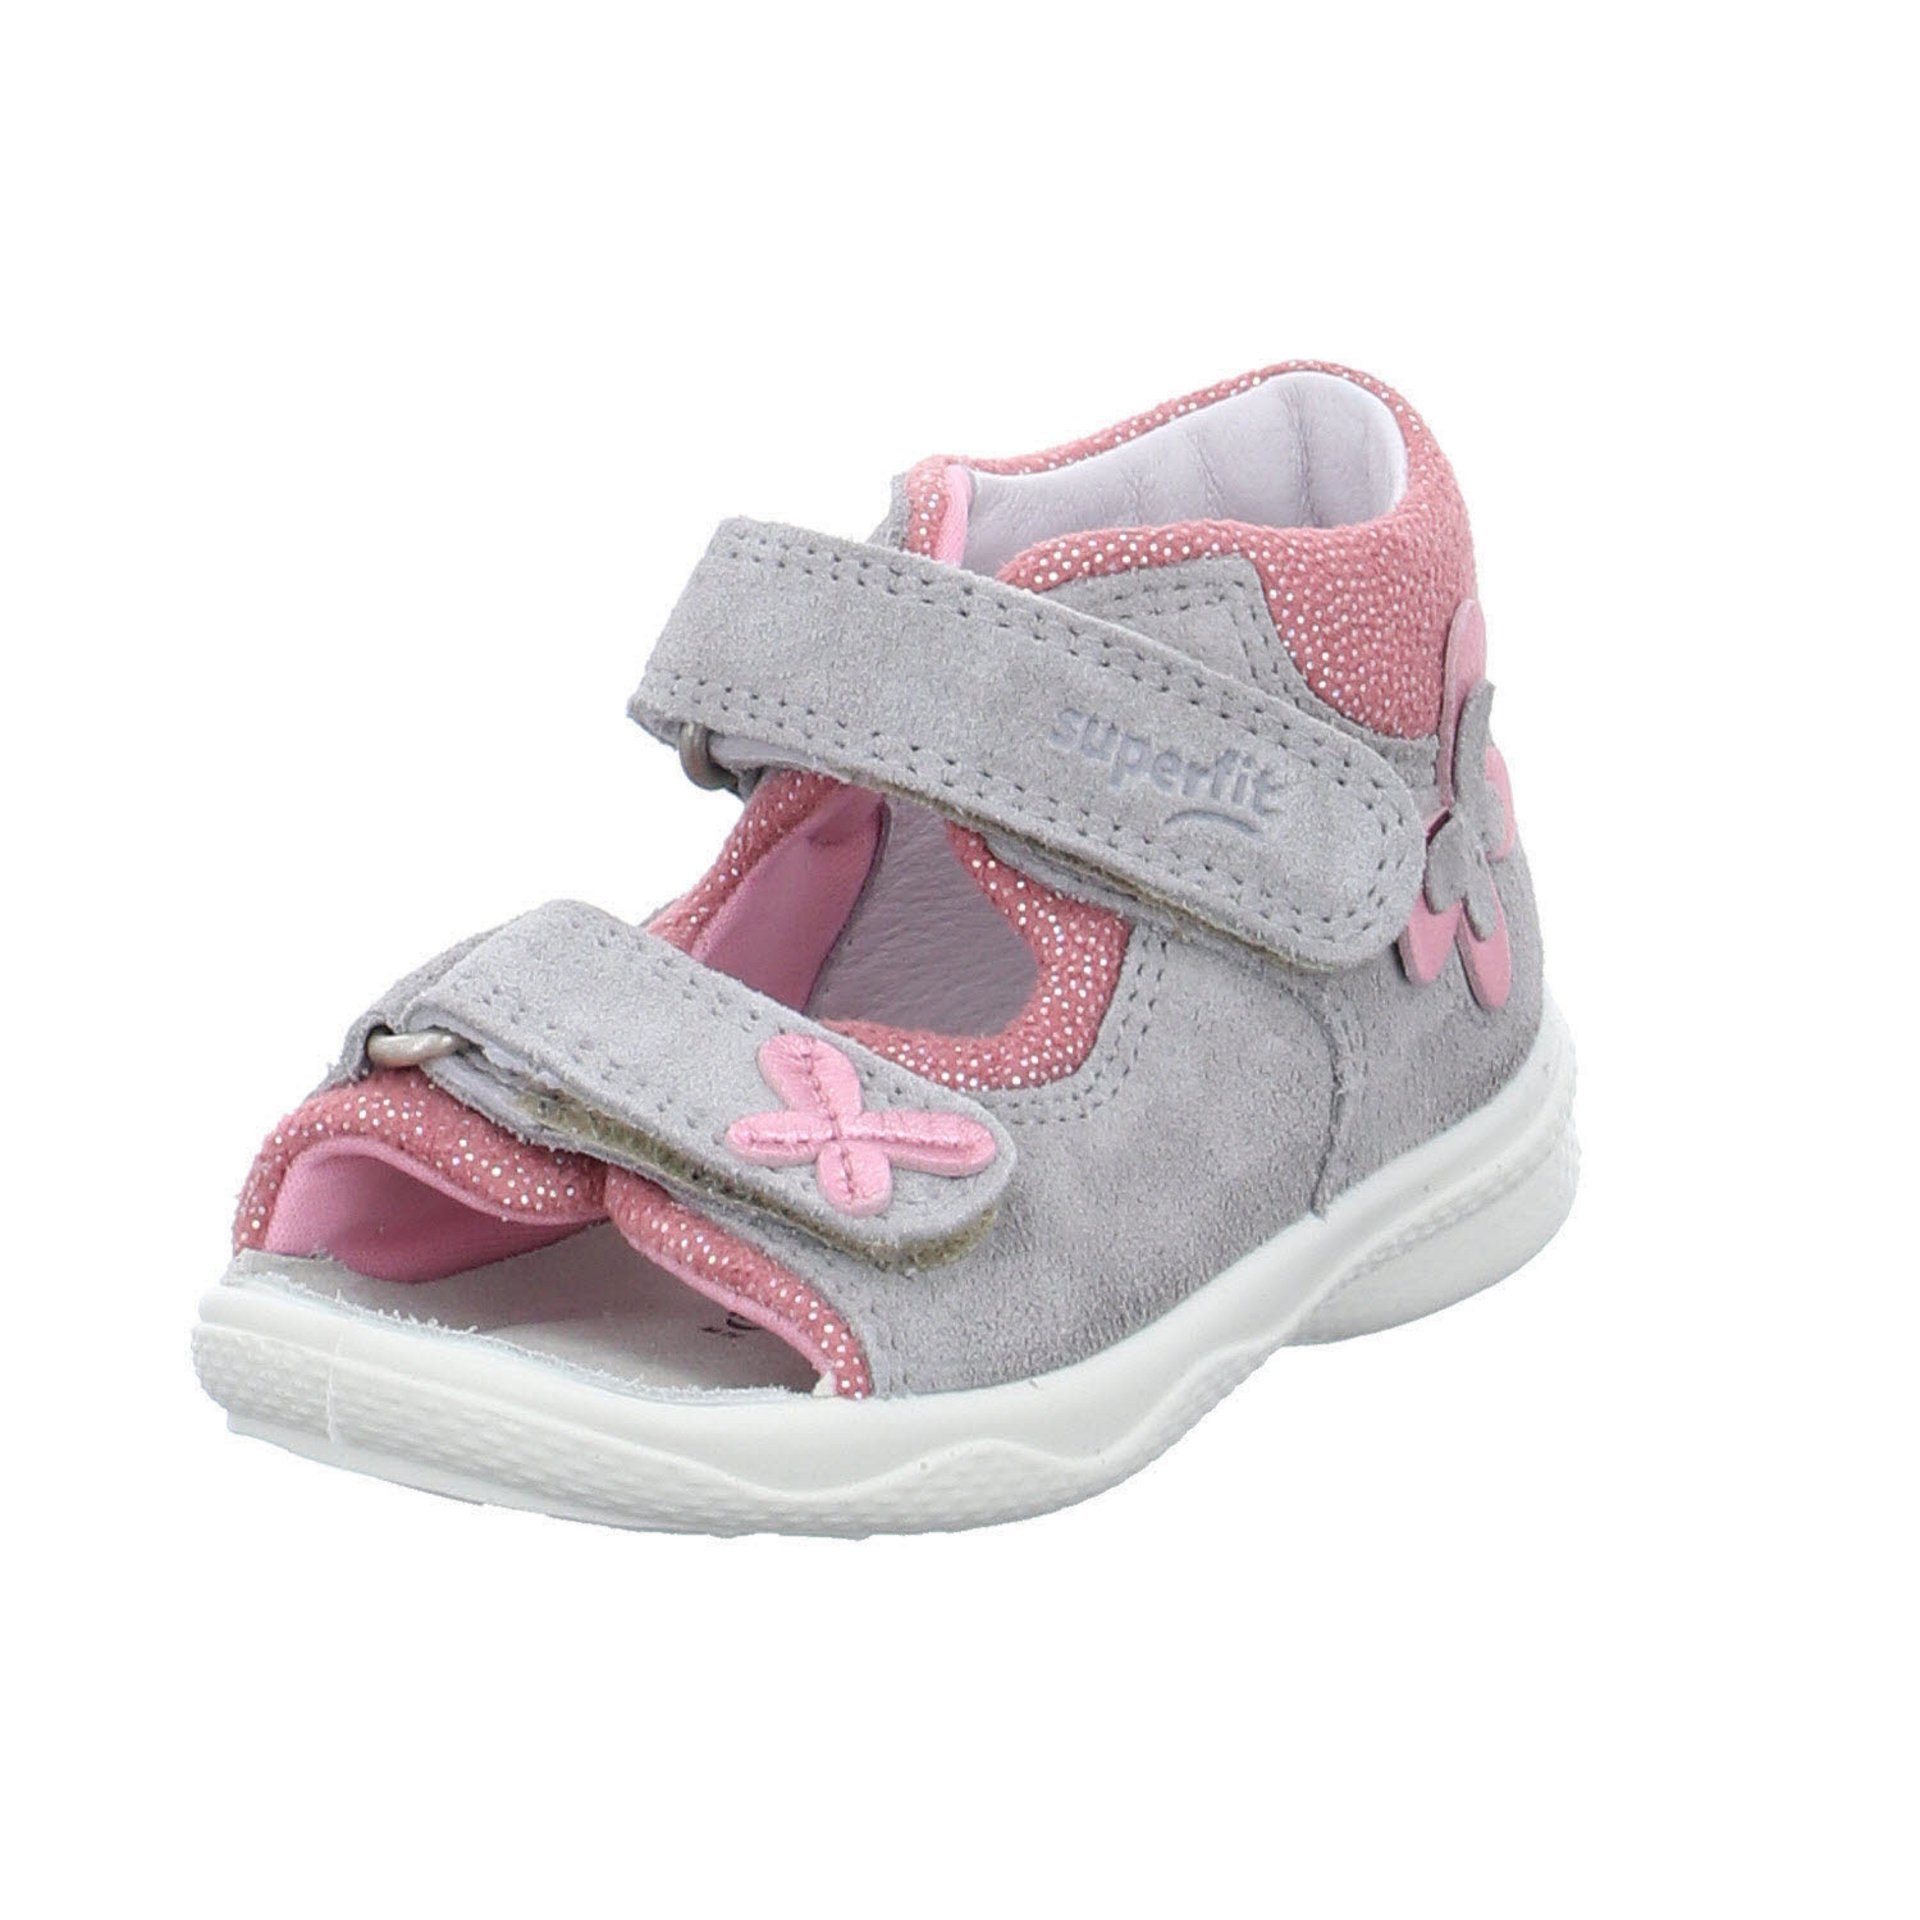 Superfit »Mädchen Sandalen Schuhe Polly Sandale Kinderschuhe« Sandale  Lederkombination online kaufen | OTTO